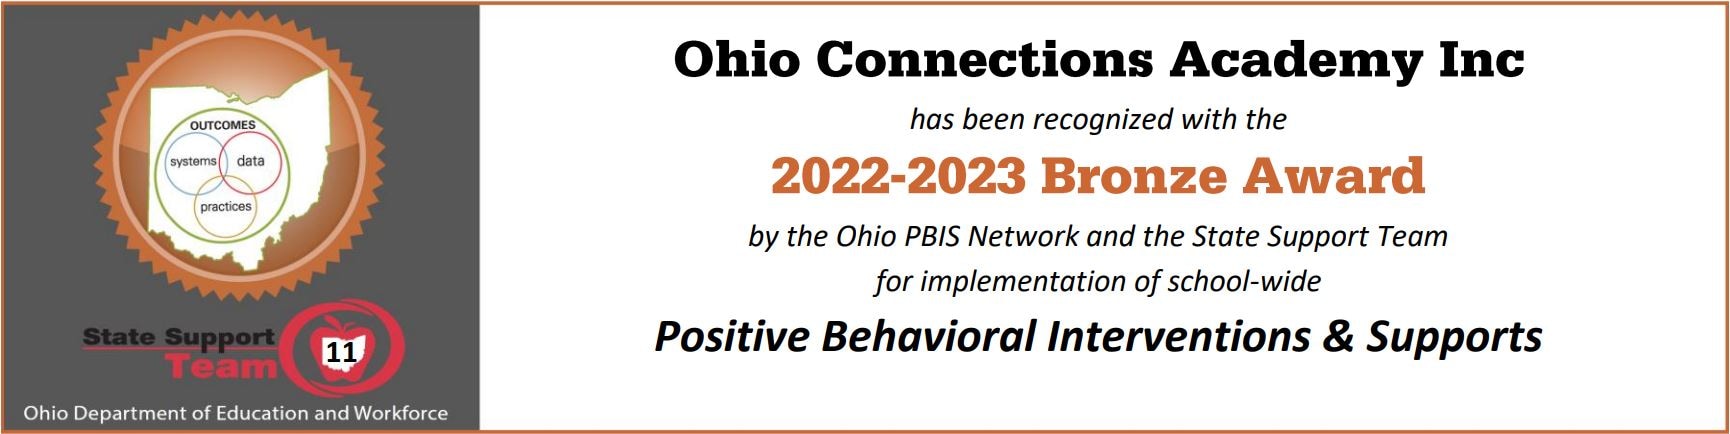 Ohio PBIS Bronze Award for 2022-2023